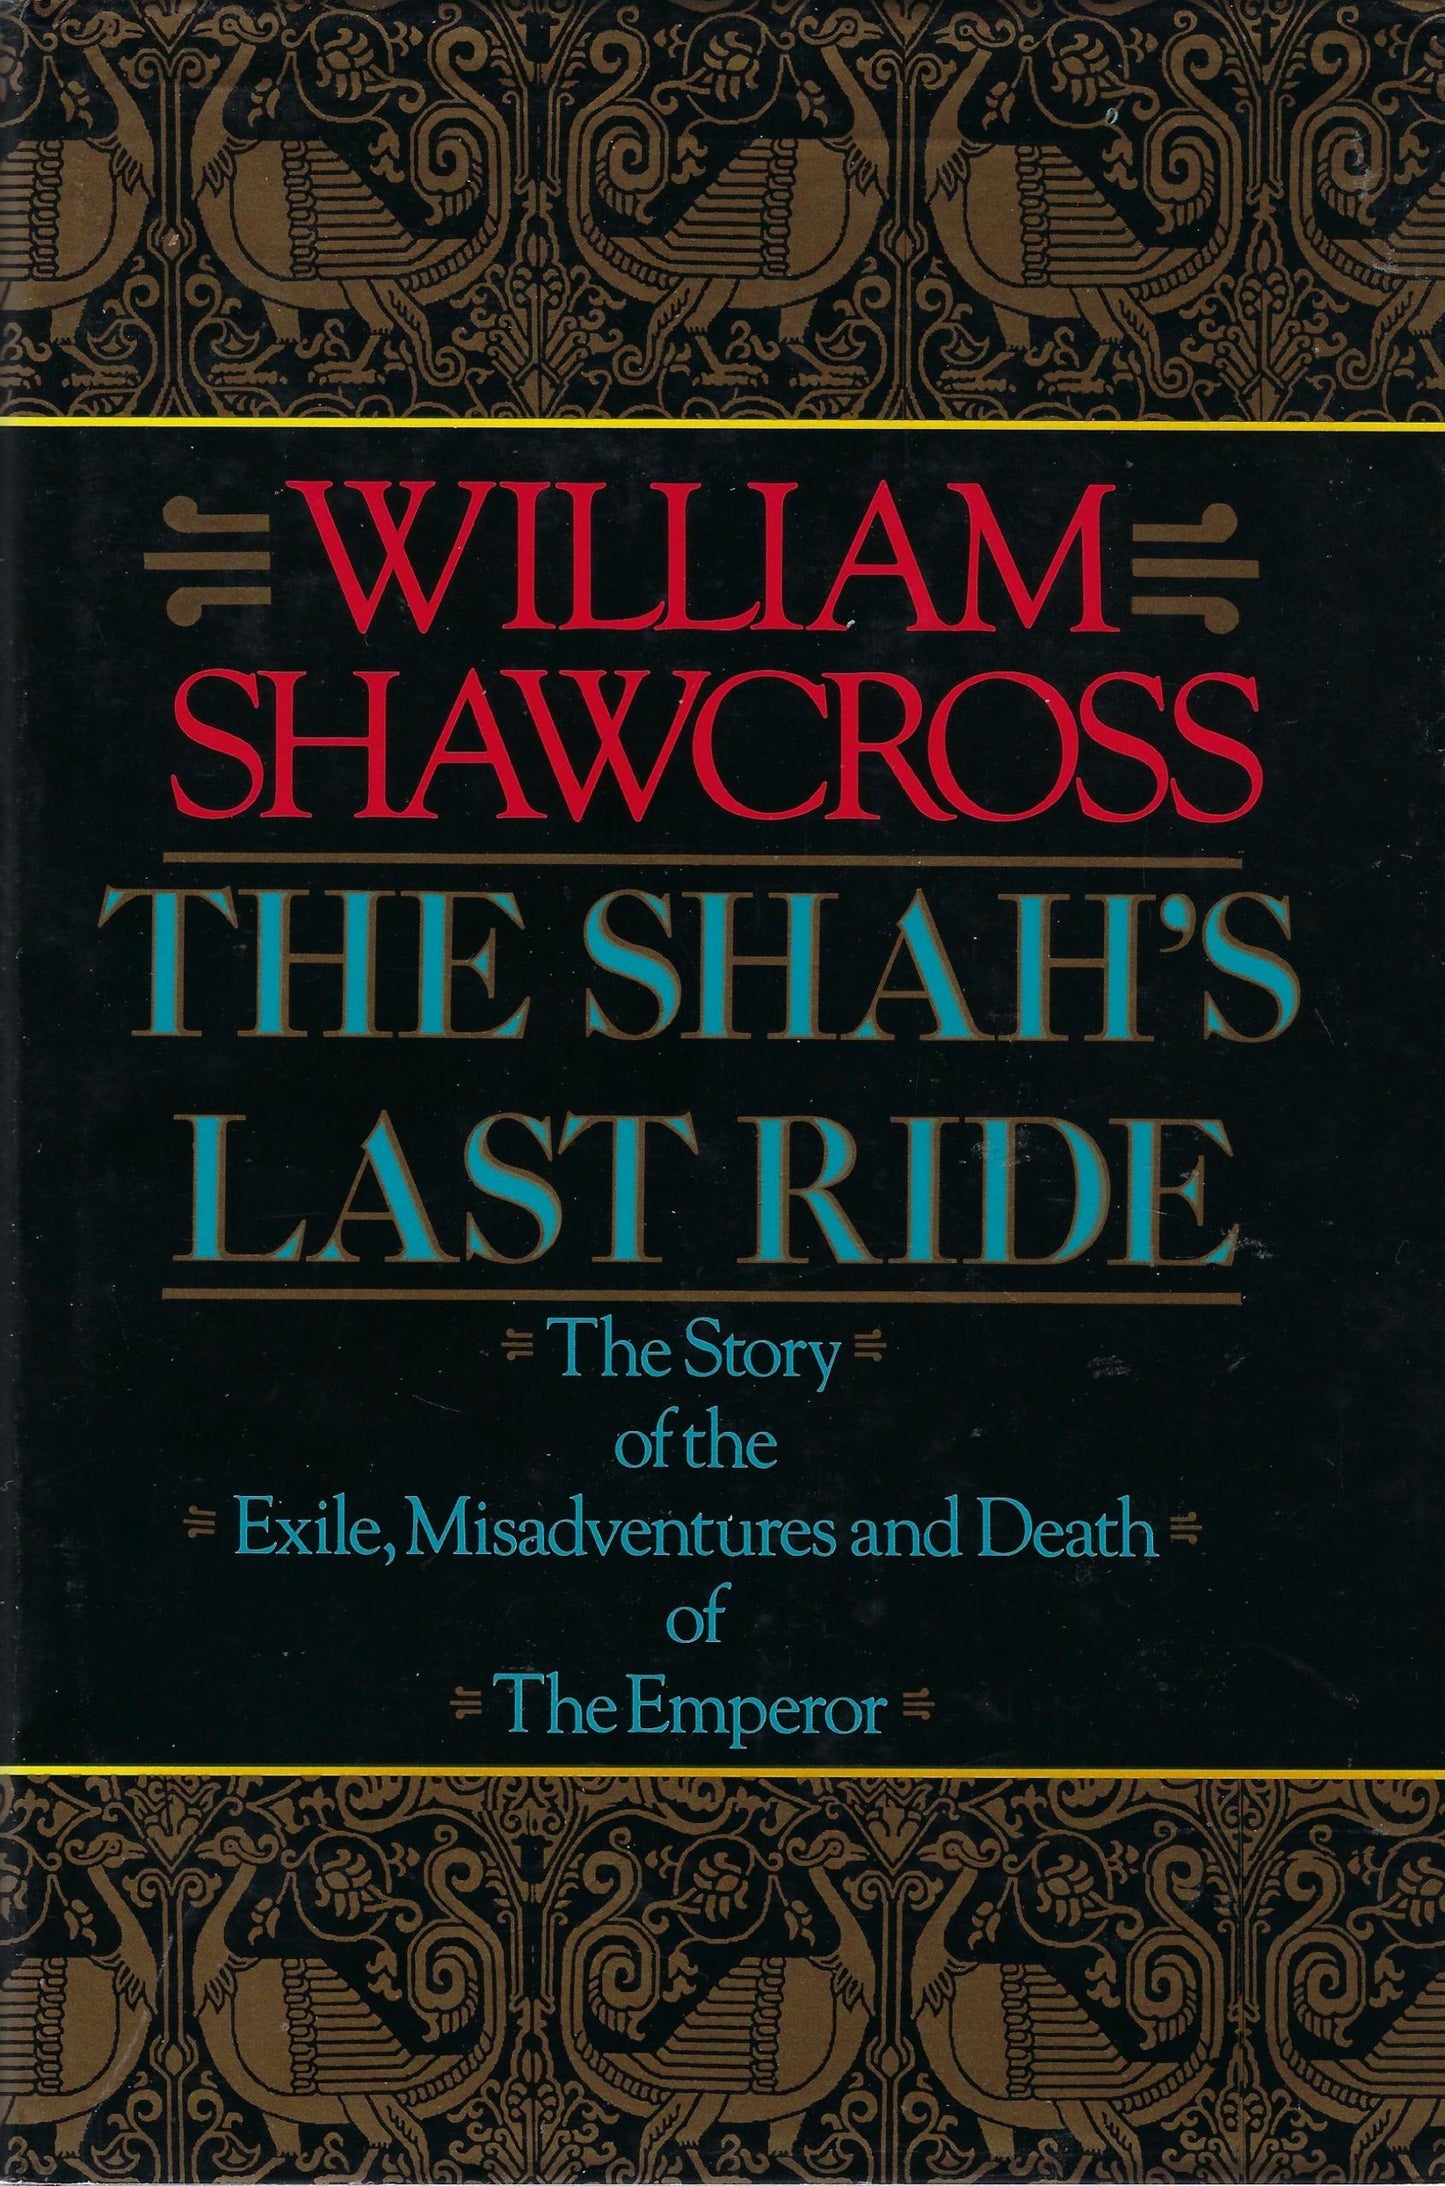 The Shah's last ride